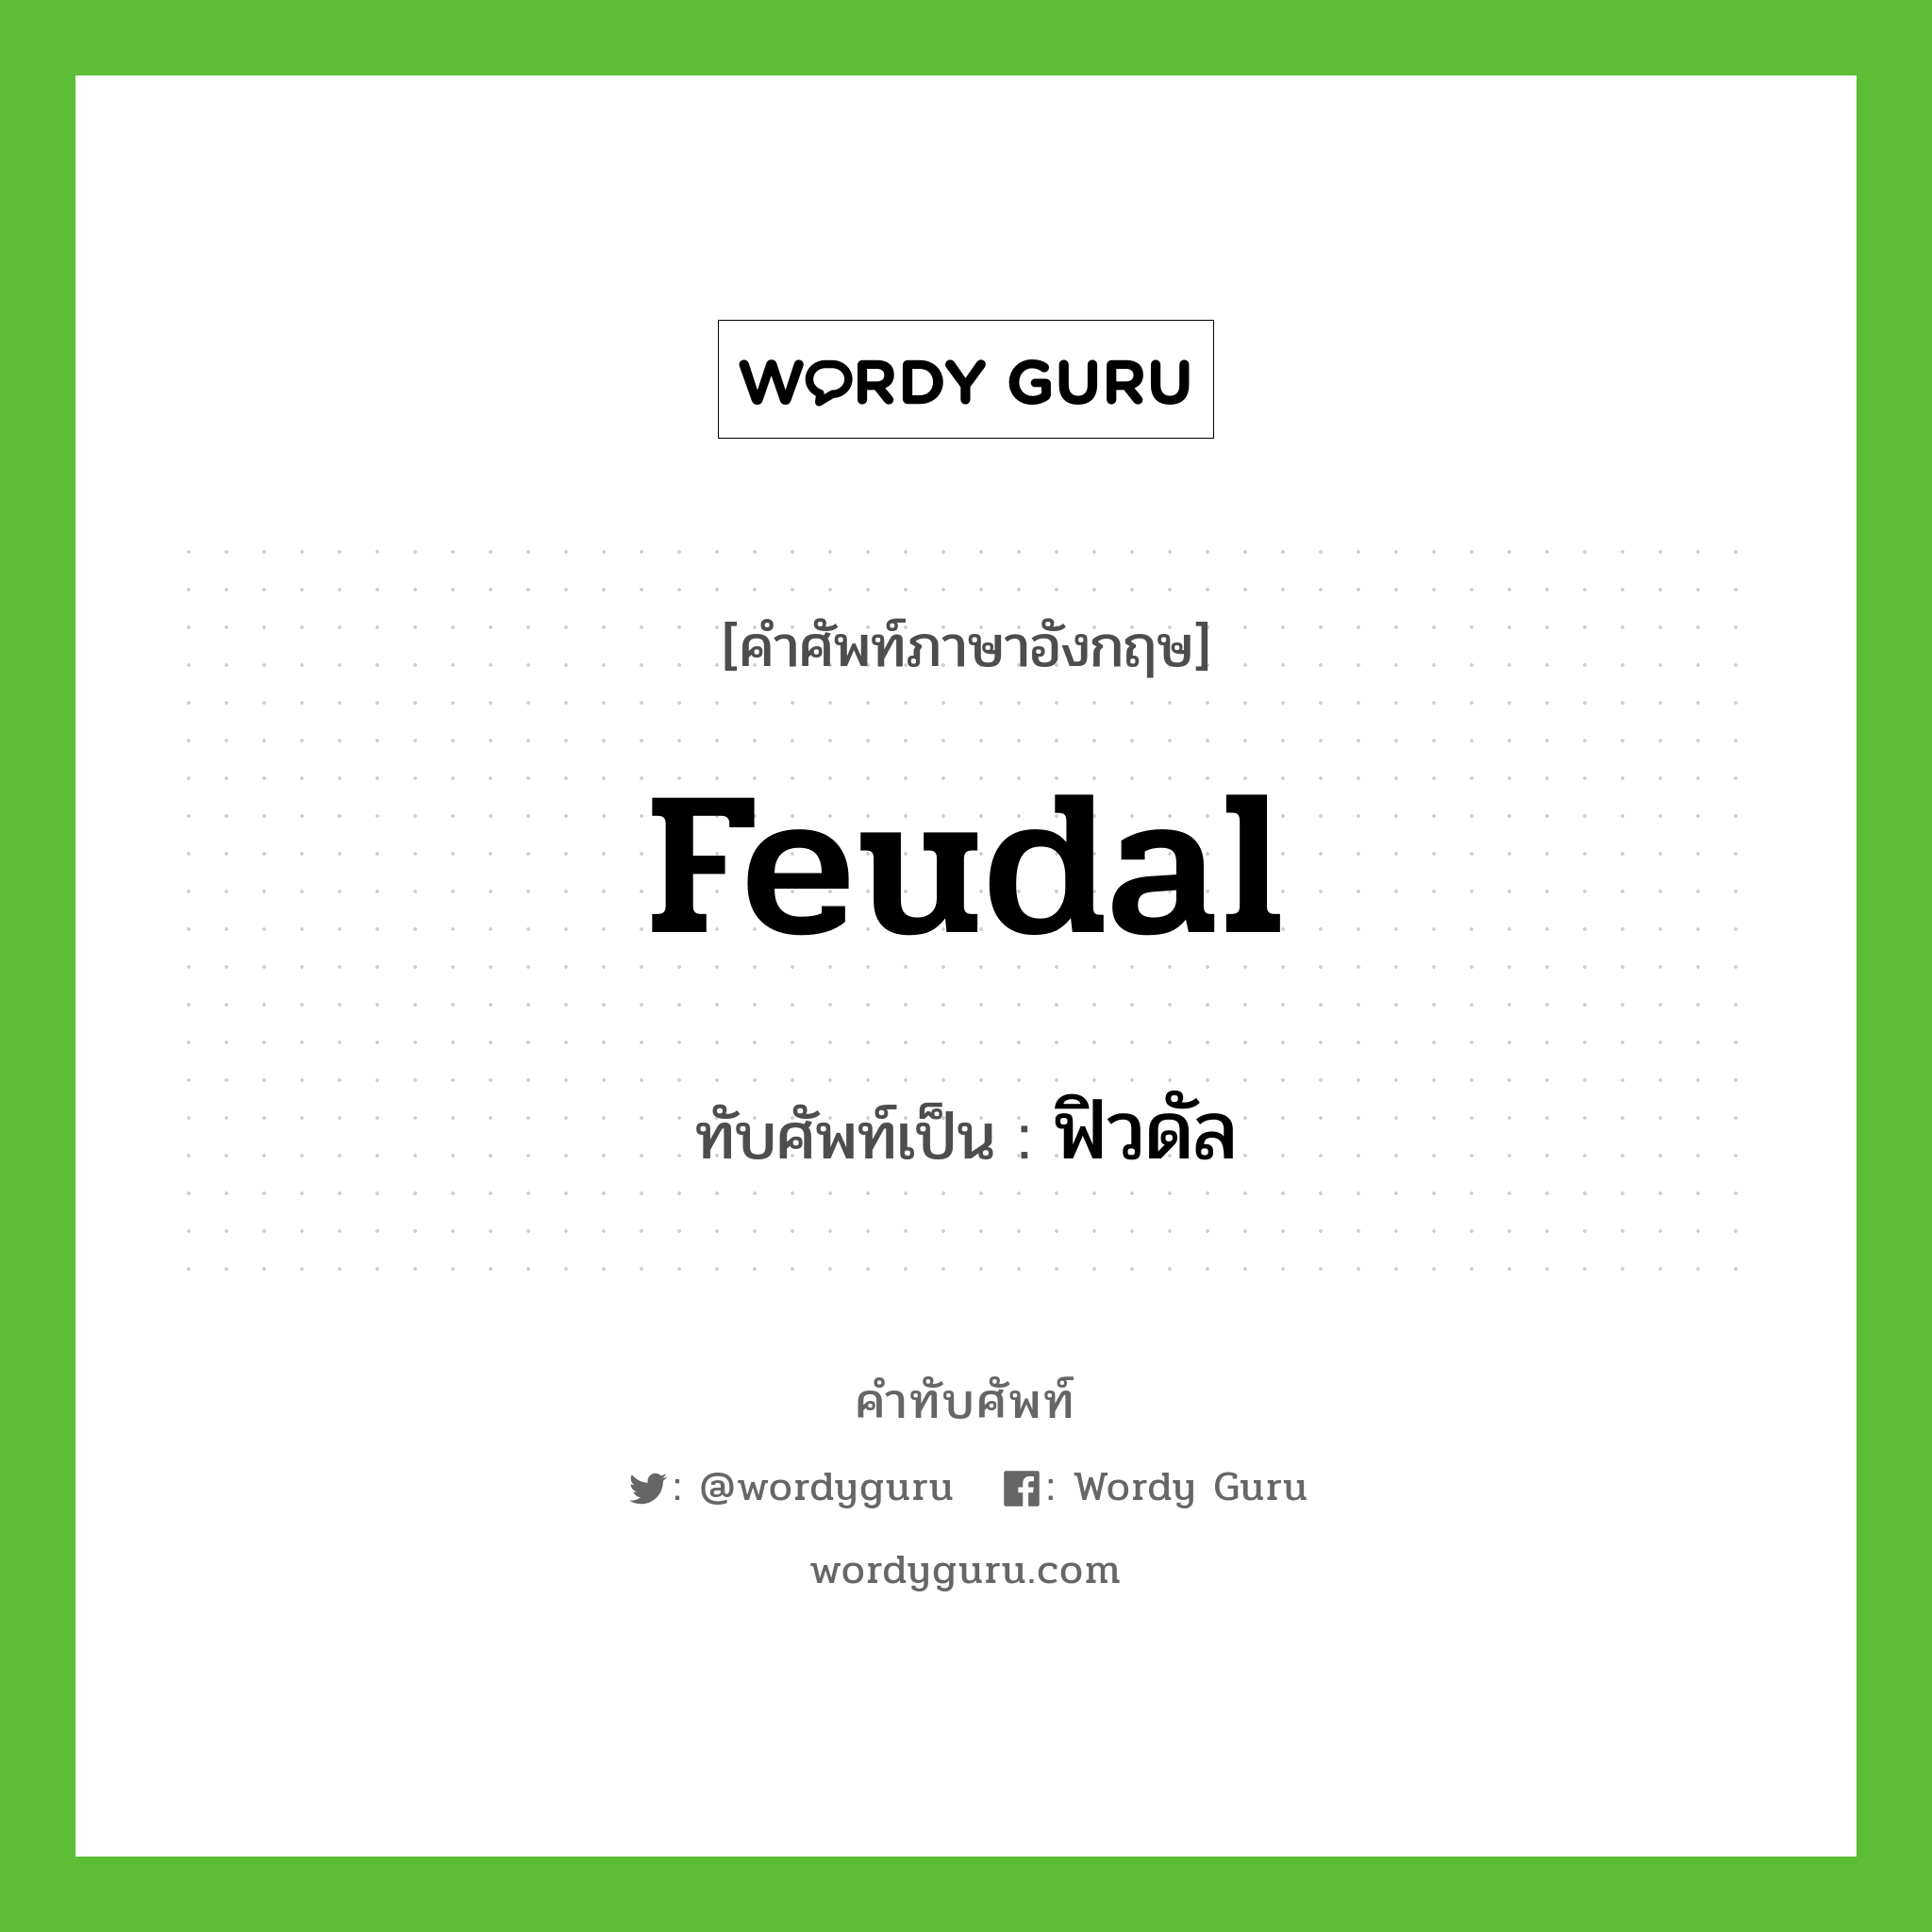 feudal เขียนเป็นคำไทยว่าอะไร?, คำศัพท์ภาษาอังกฤษ feudal ทับศัพท์เป็น ฟิวดัล